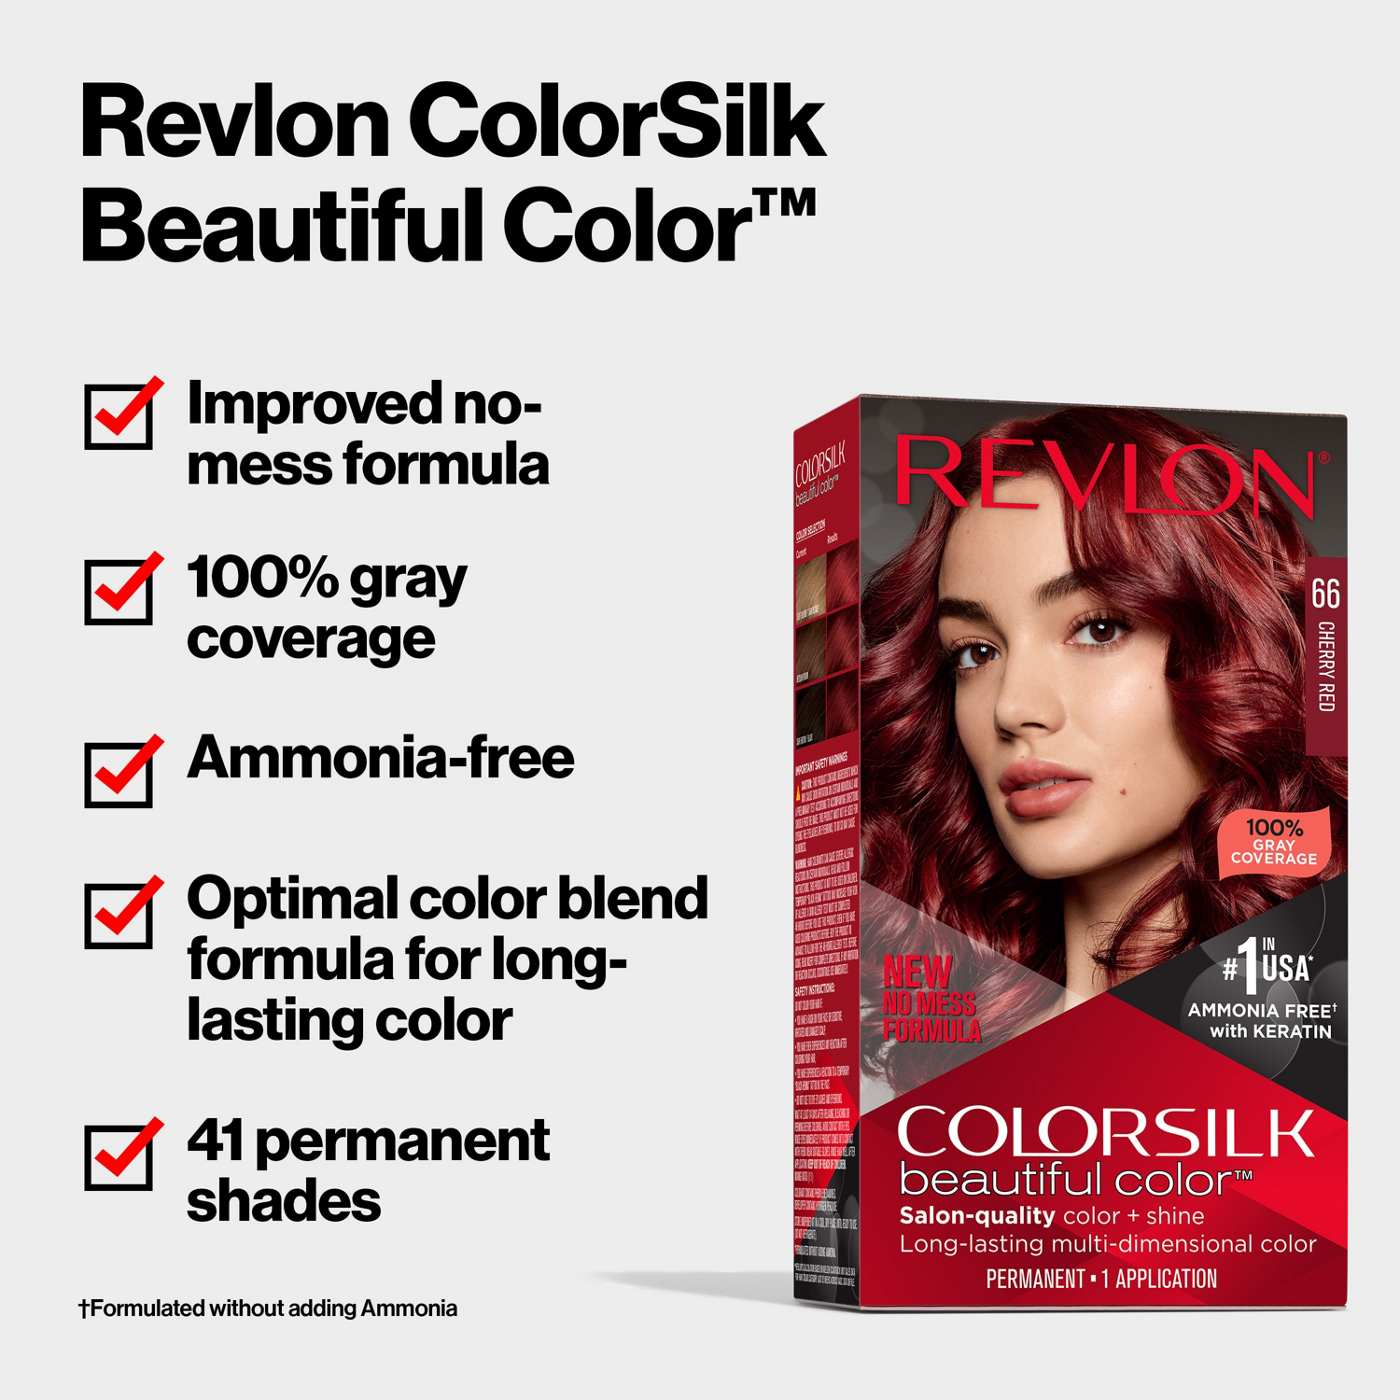 Revlon ColorSilk Hair Color - 66 Cherry Red